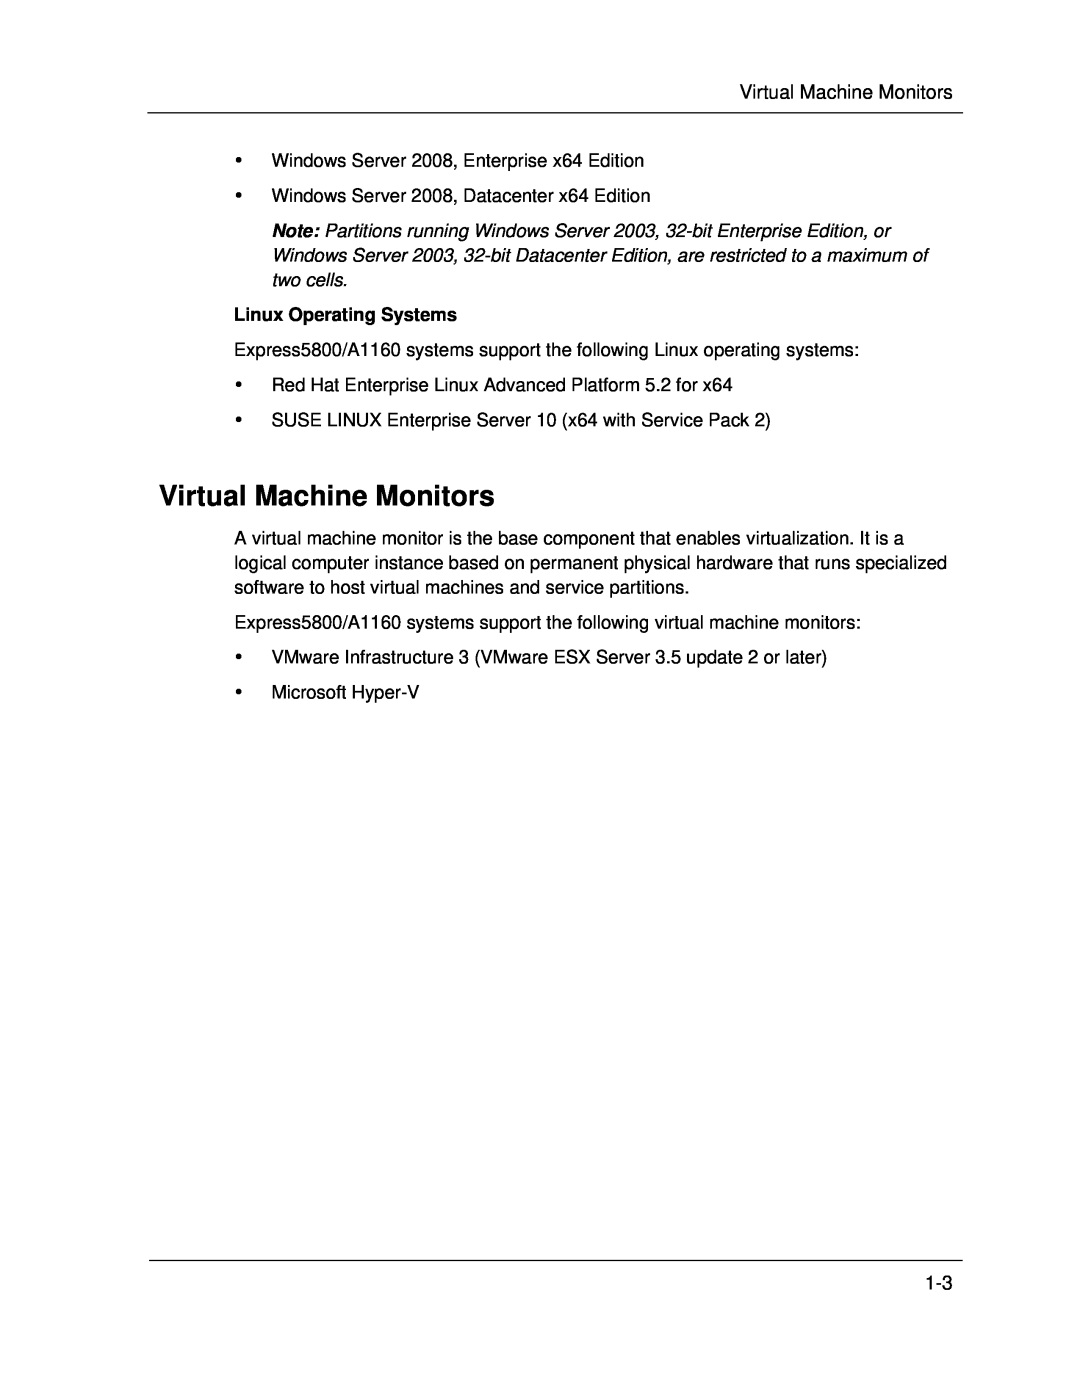 NEC A1160 manual Virtual Machine Monitors, Linux Operating Systems 